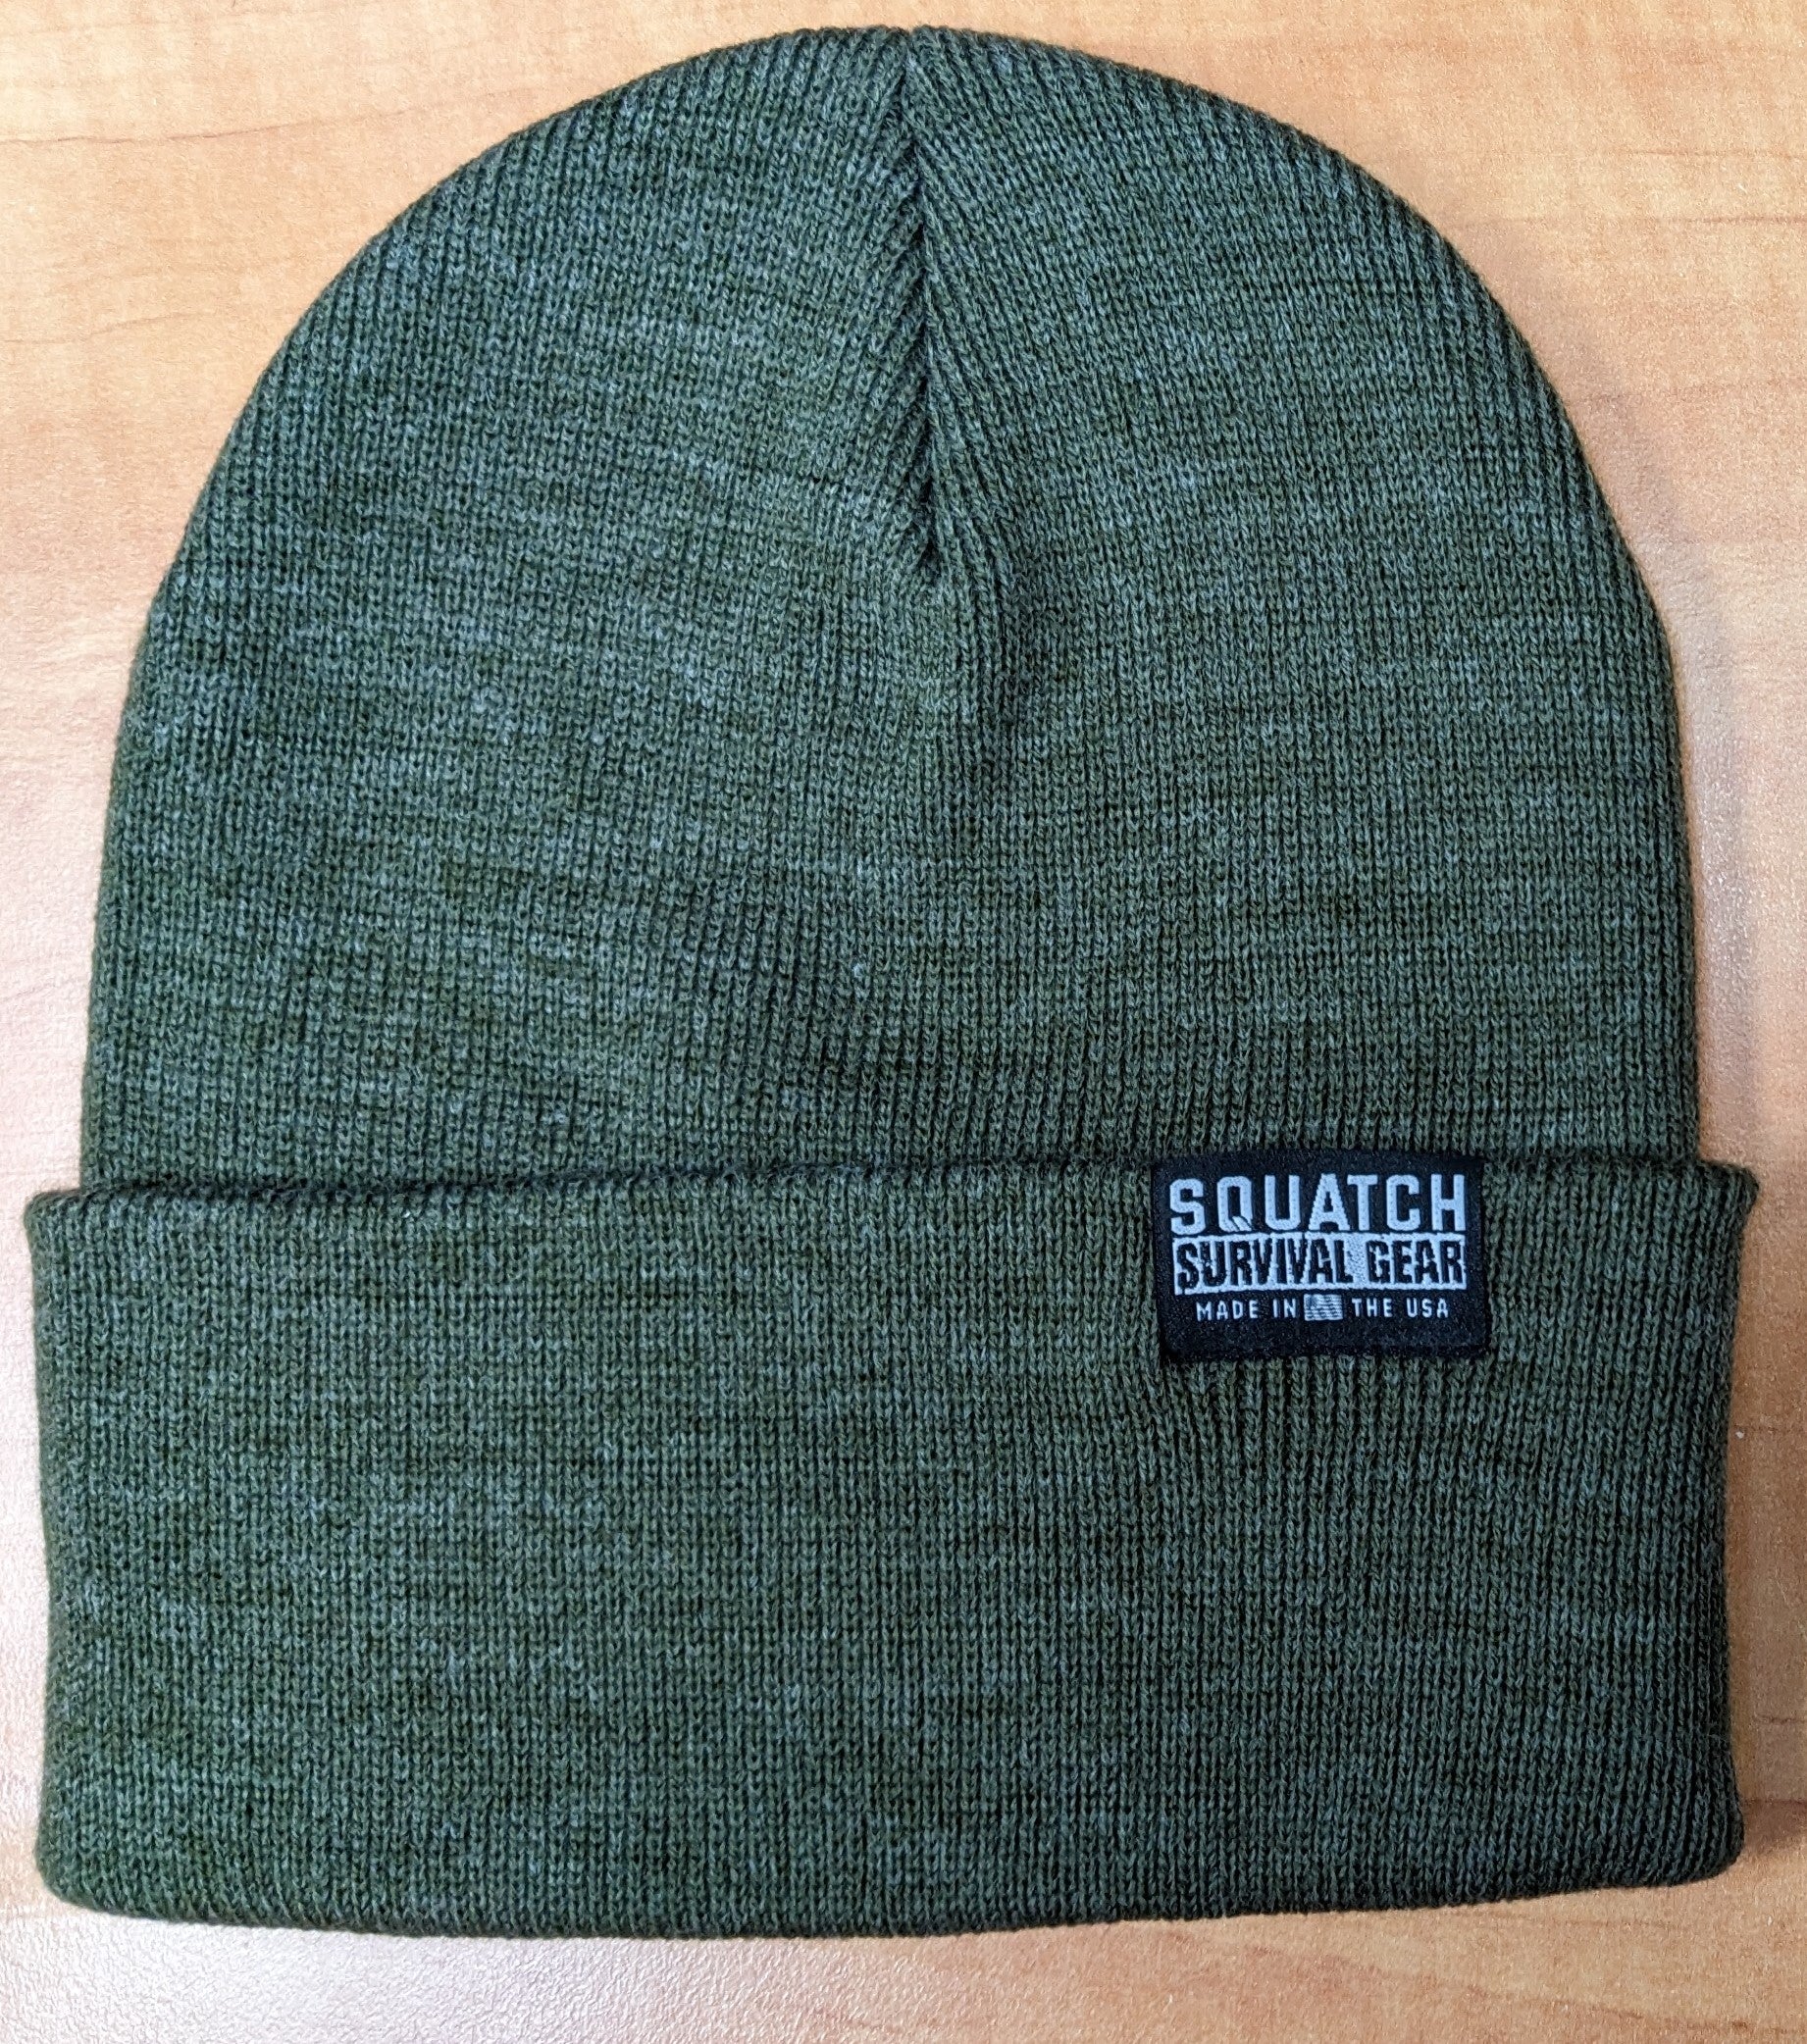 Squatch Survival Gear Beanie hat - SquatchSurvivalGear